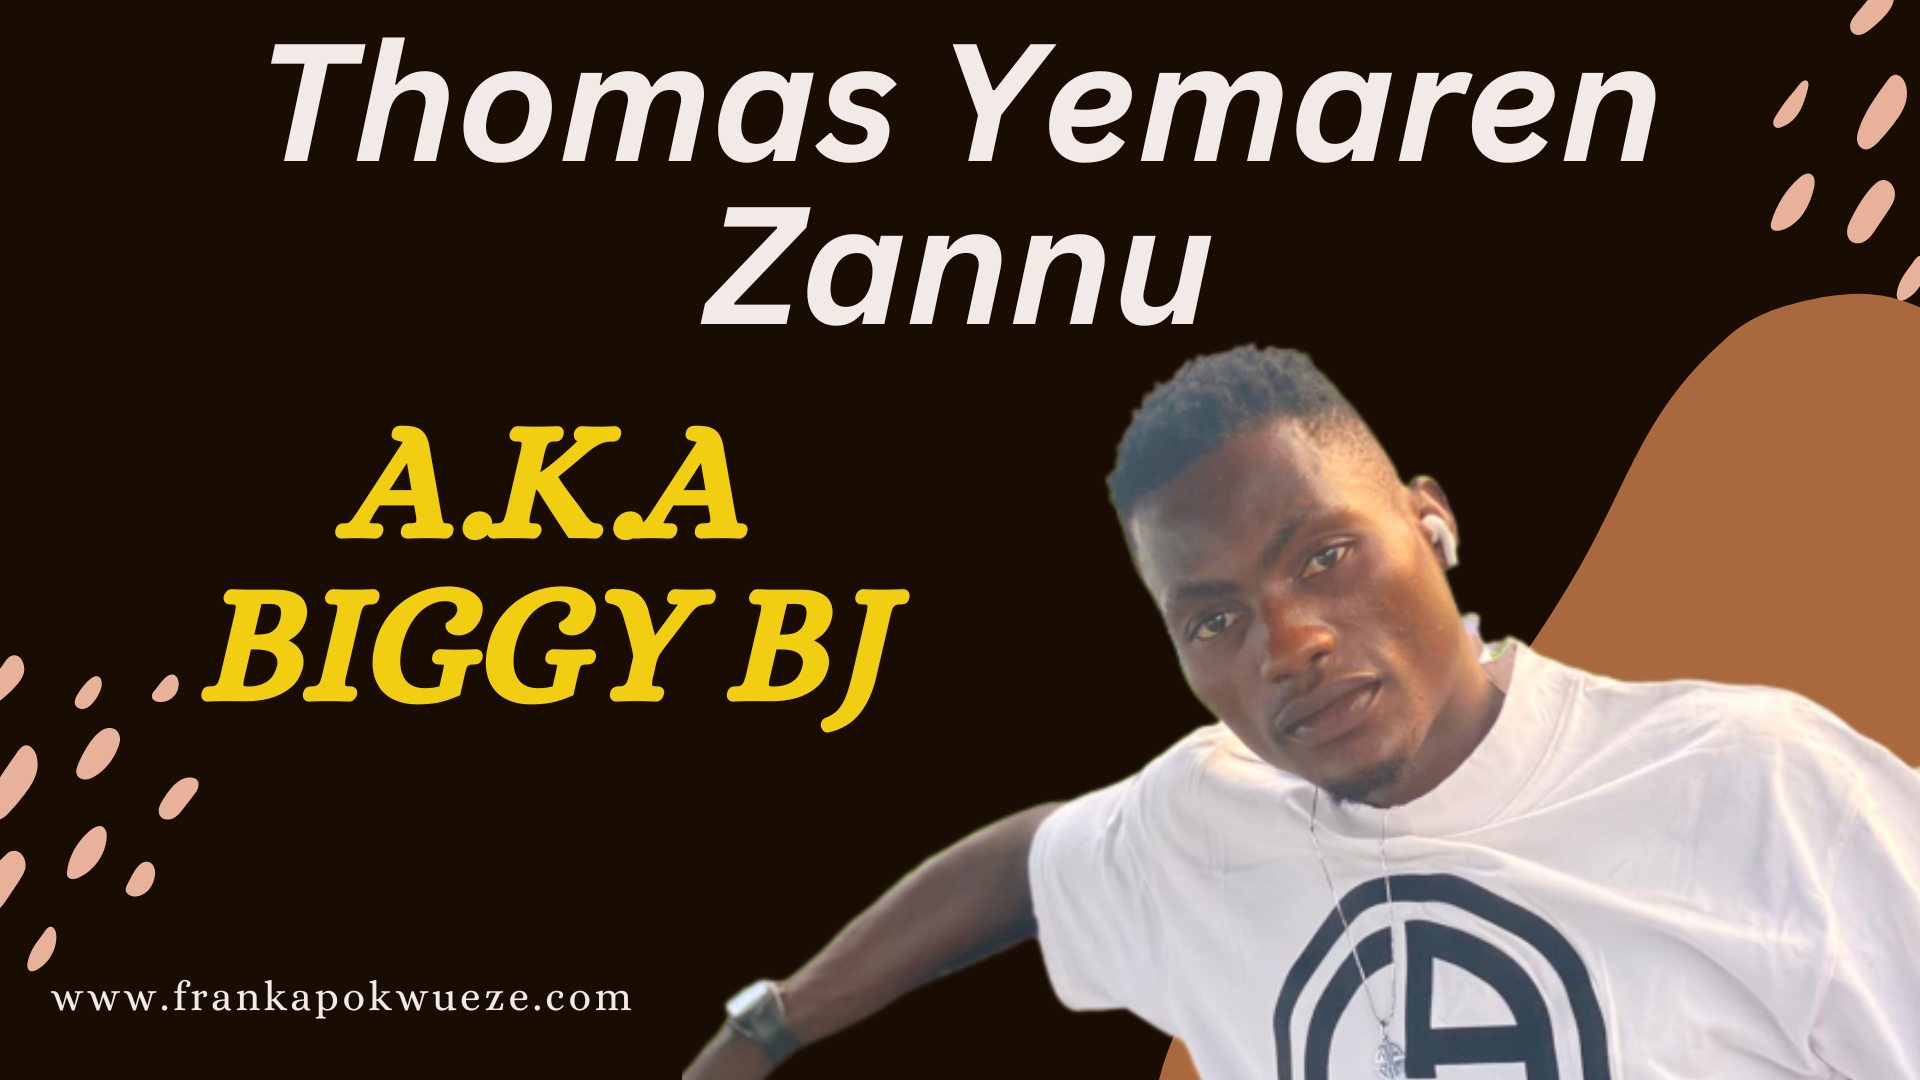 Thomas Yemaren Zannu A.K.A BIGGY BJ